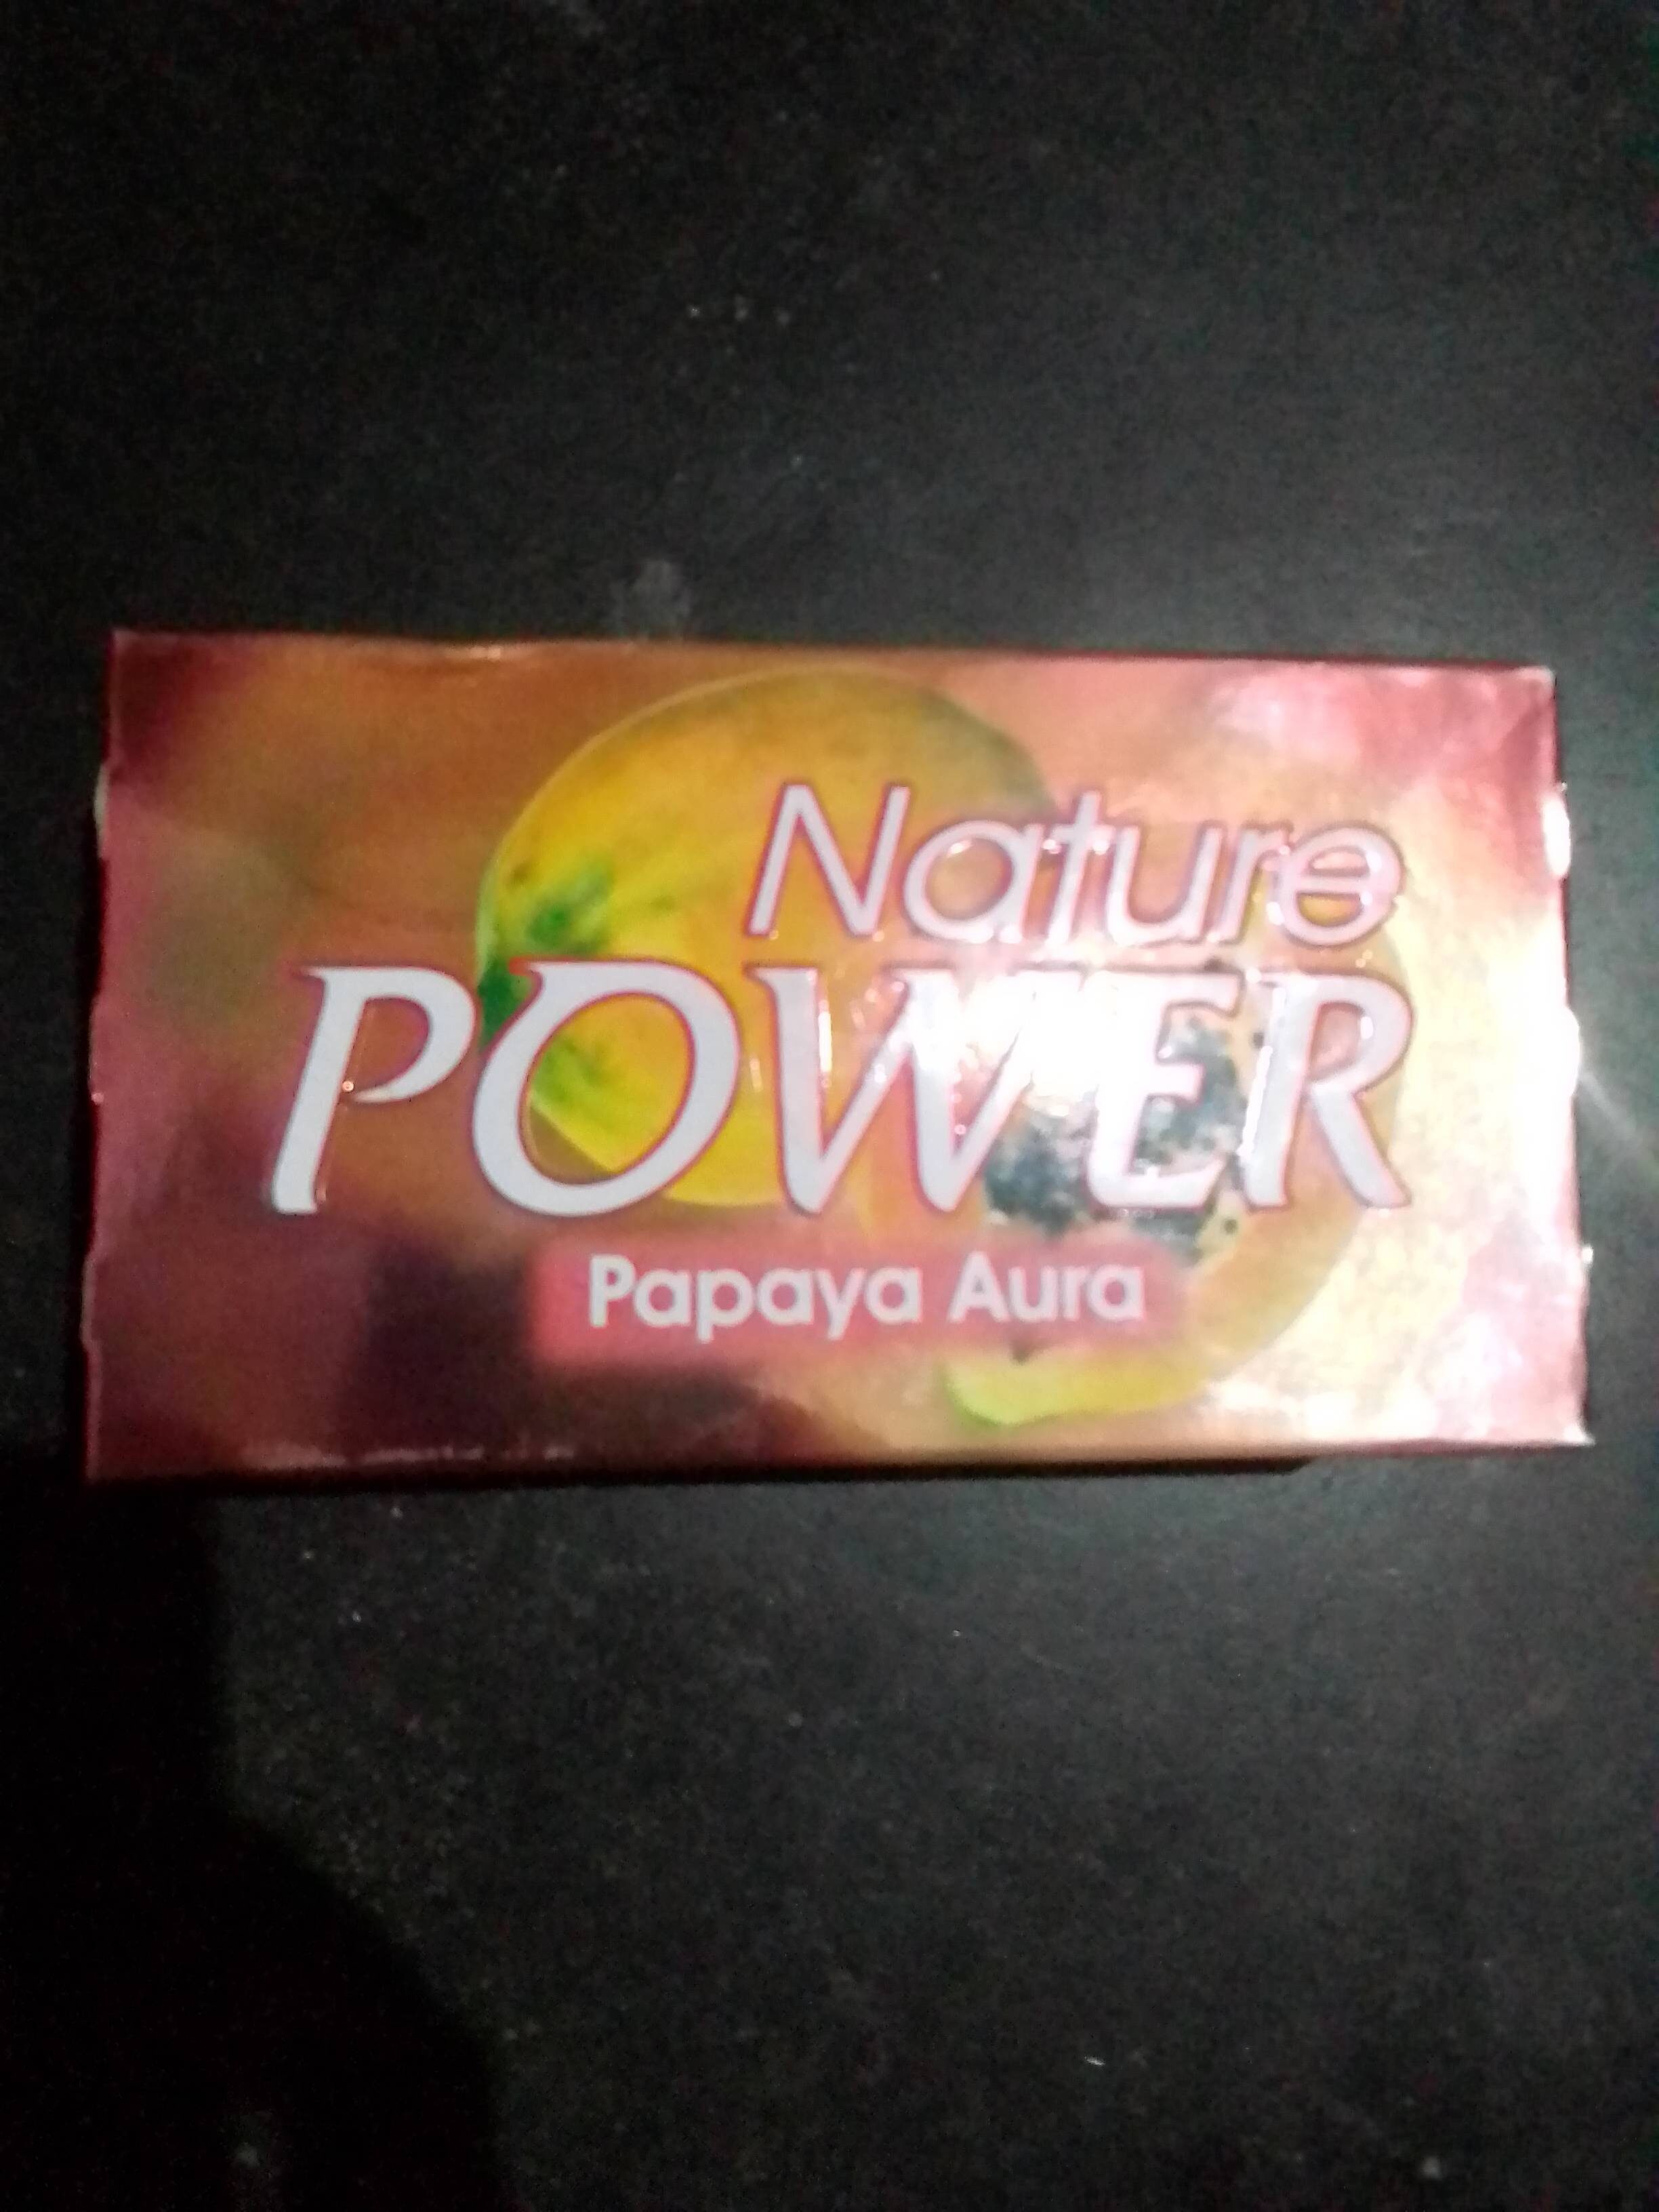 Nature power papaya soap - Produit - en